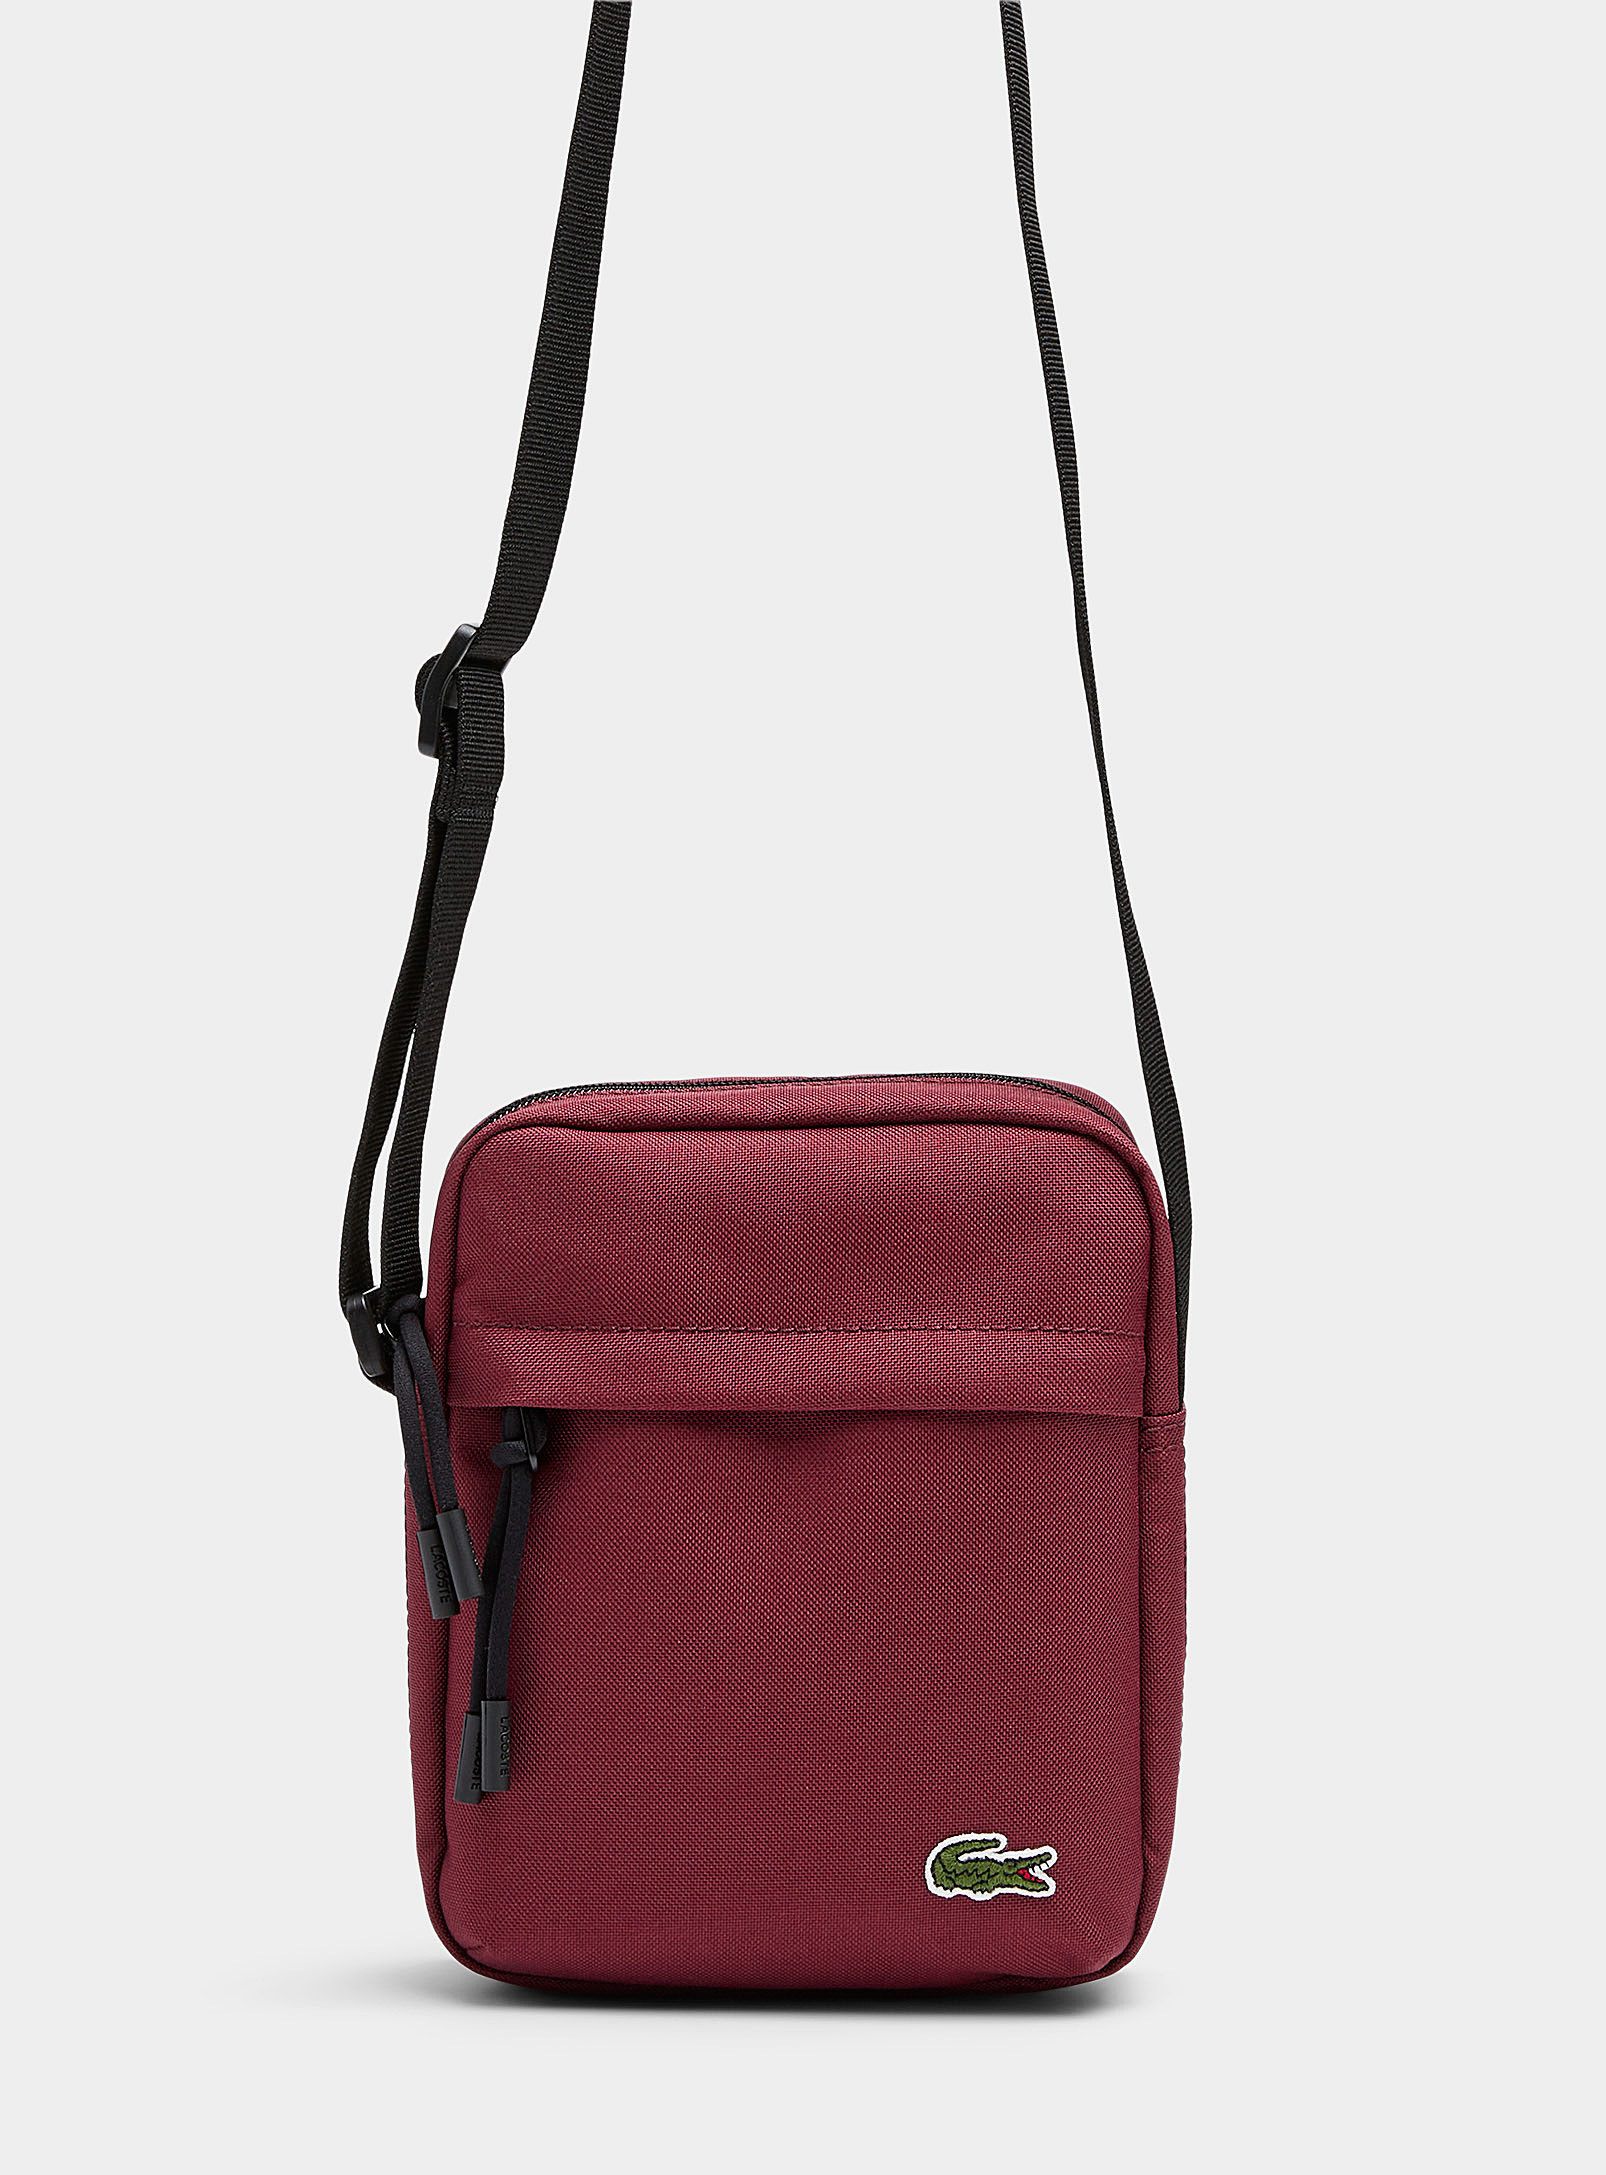 Lacoste Neocroc Shoulder Bag In Ruby/vermilion